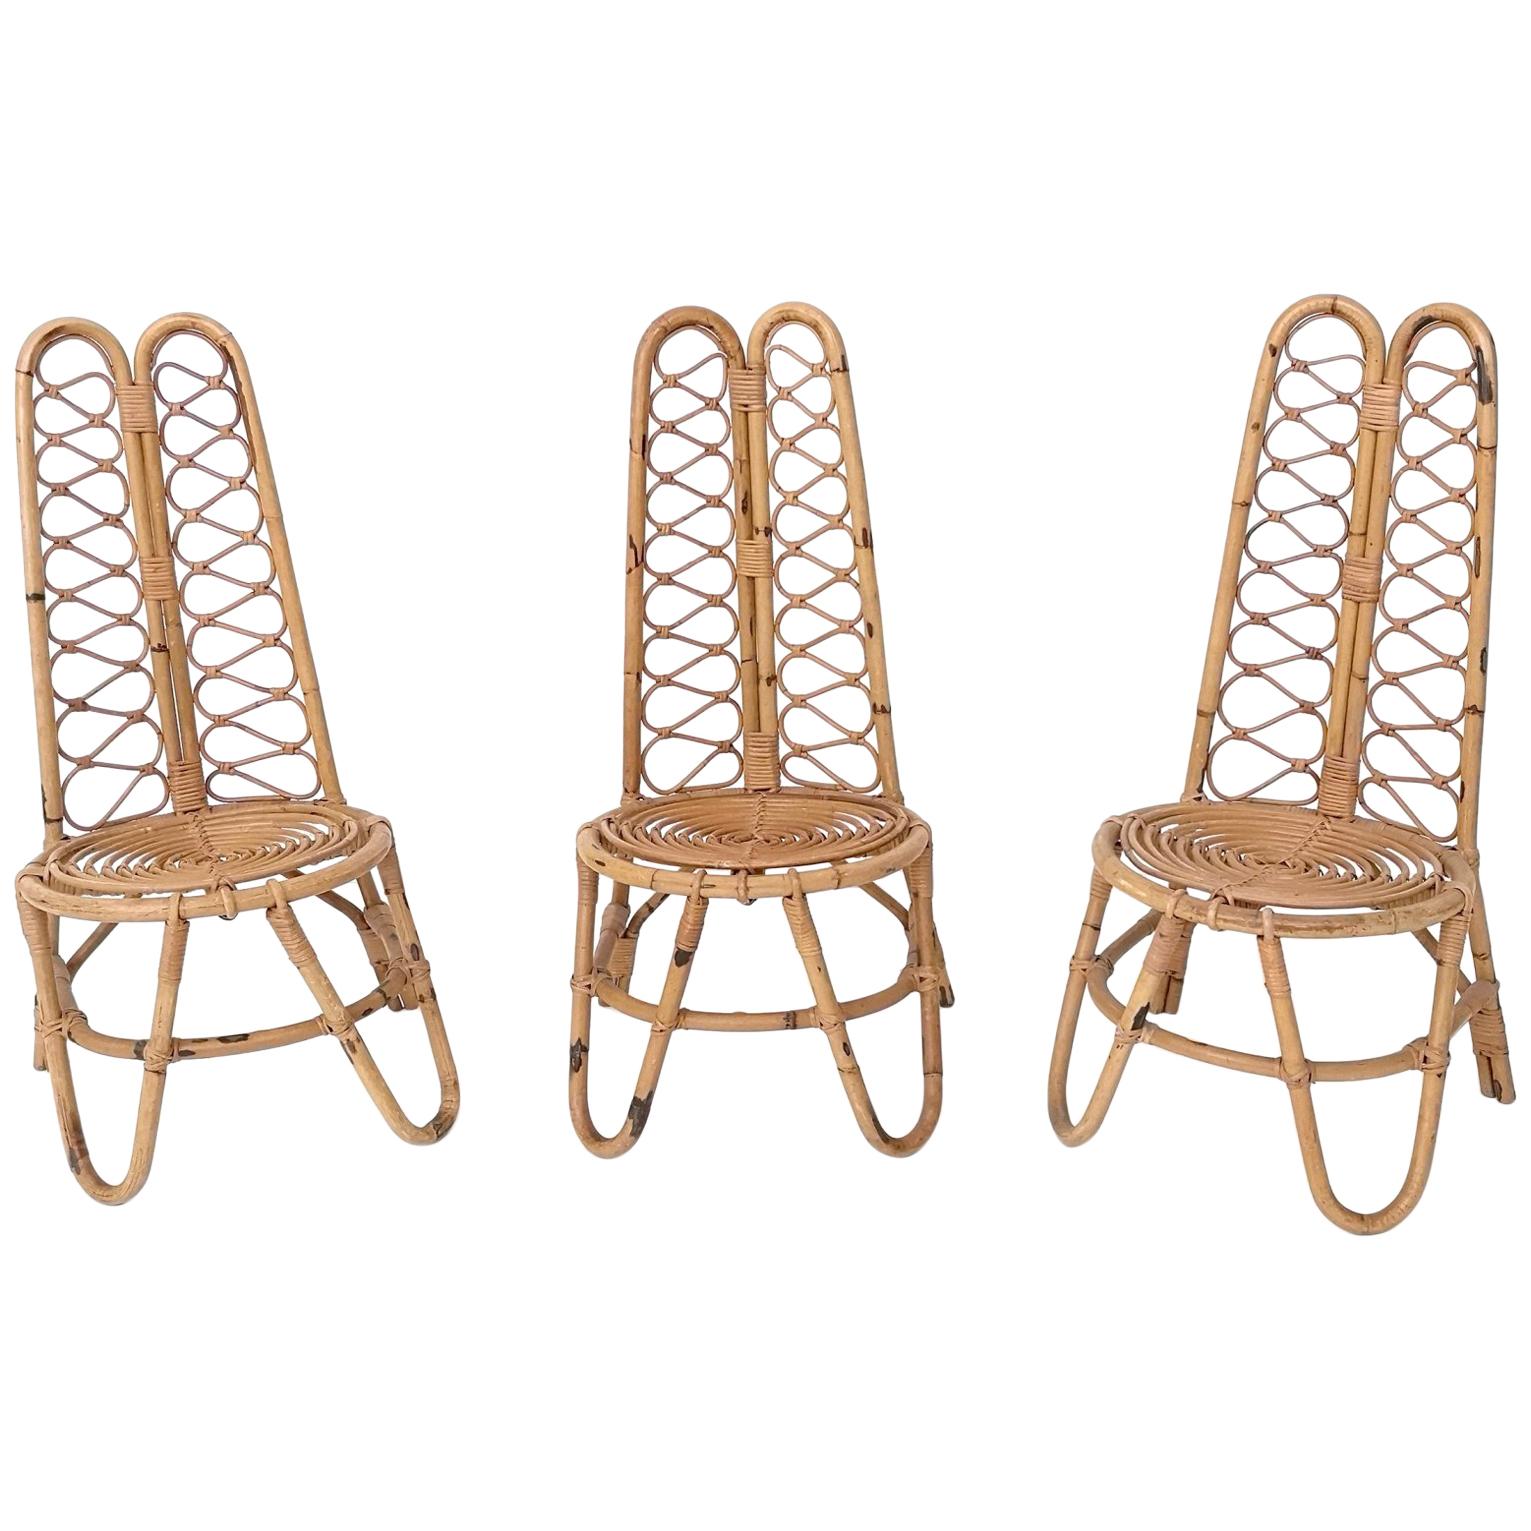 Set of Three Midcentury Bamboo Chairs, Italy